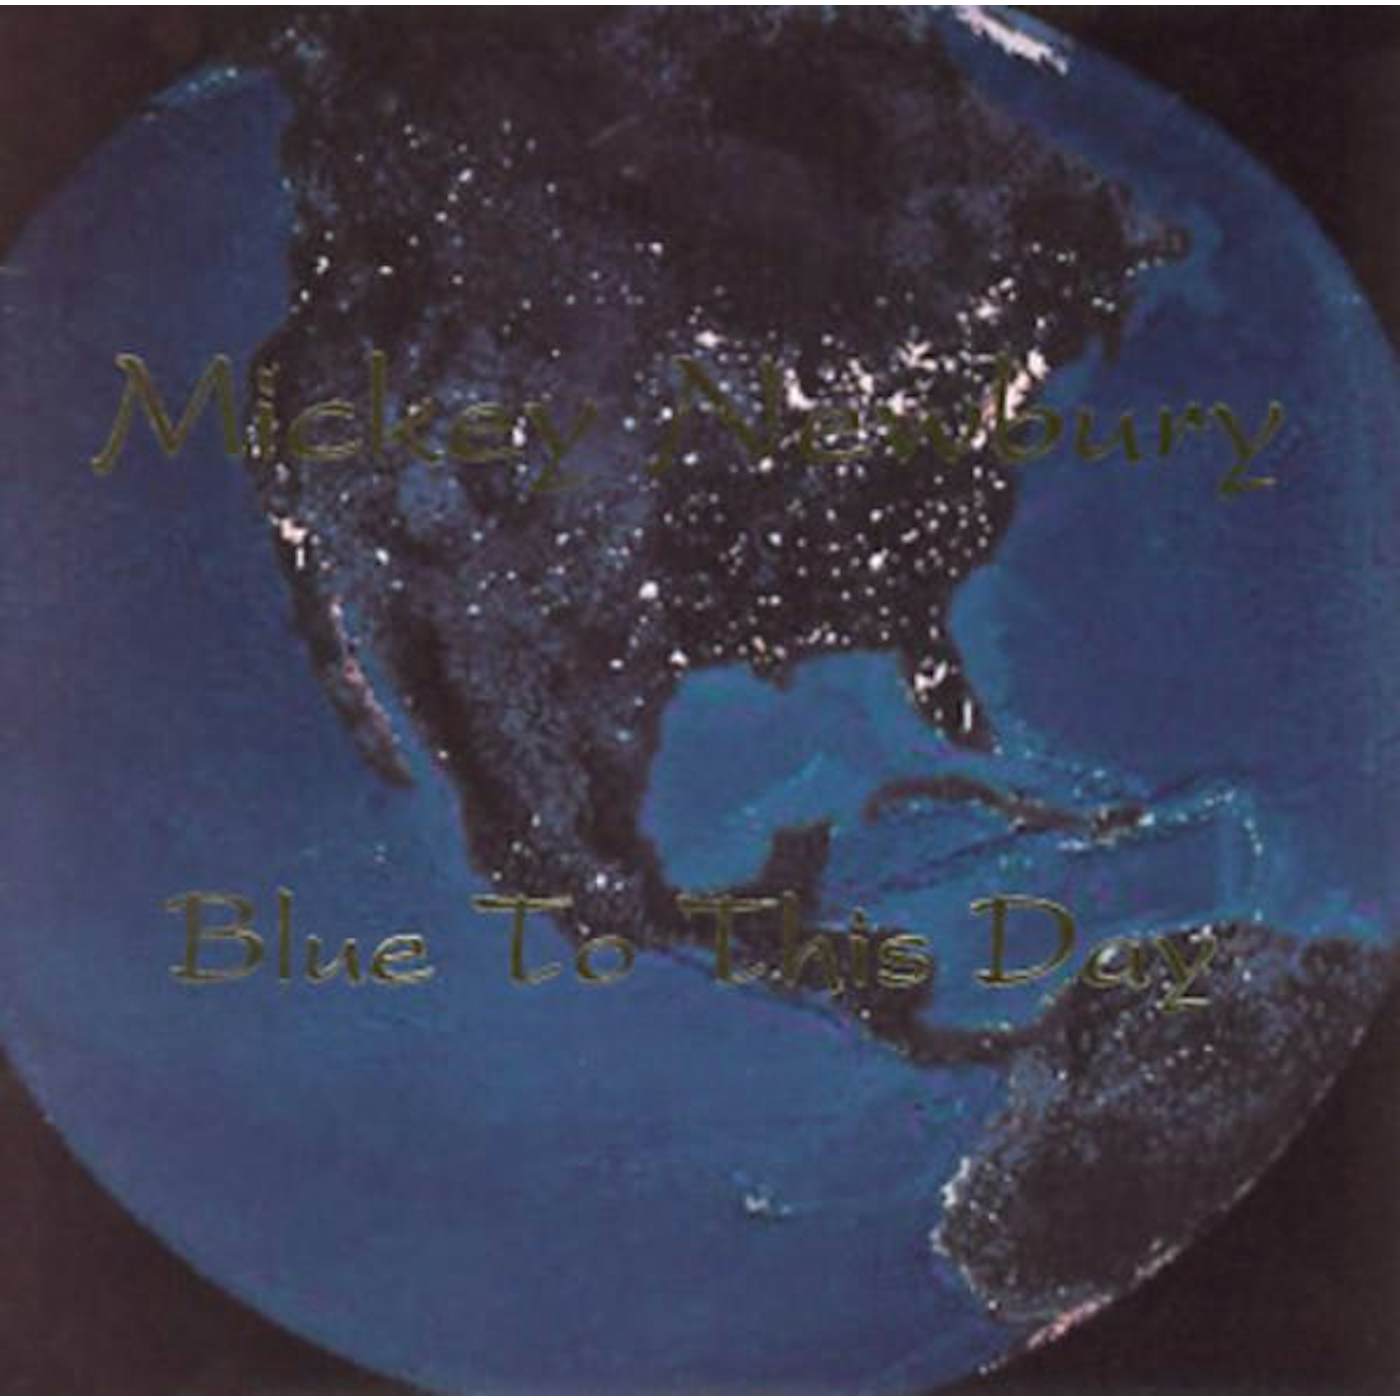 Mickey Newbury BLUE TO THIS DAY CD